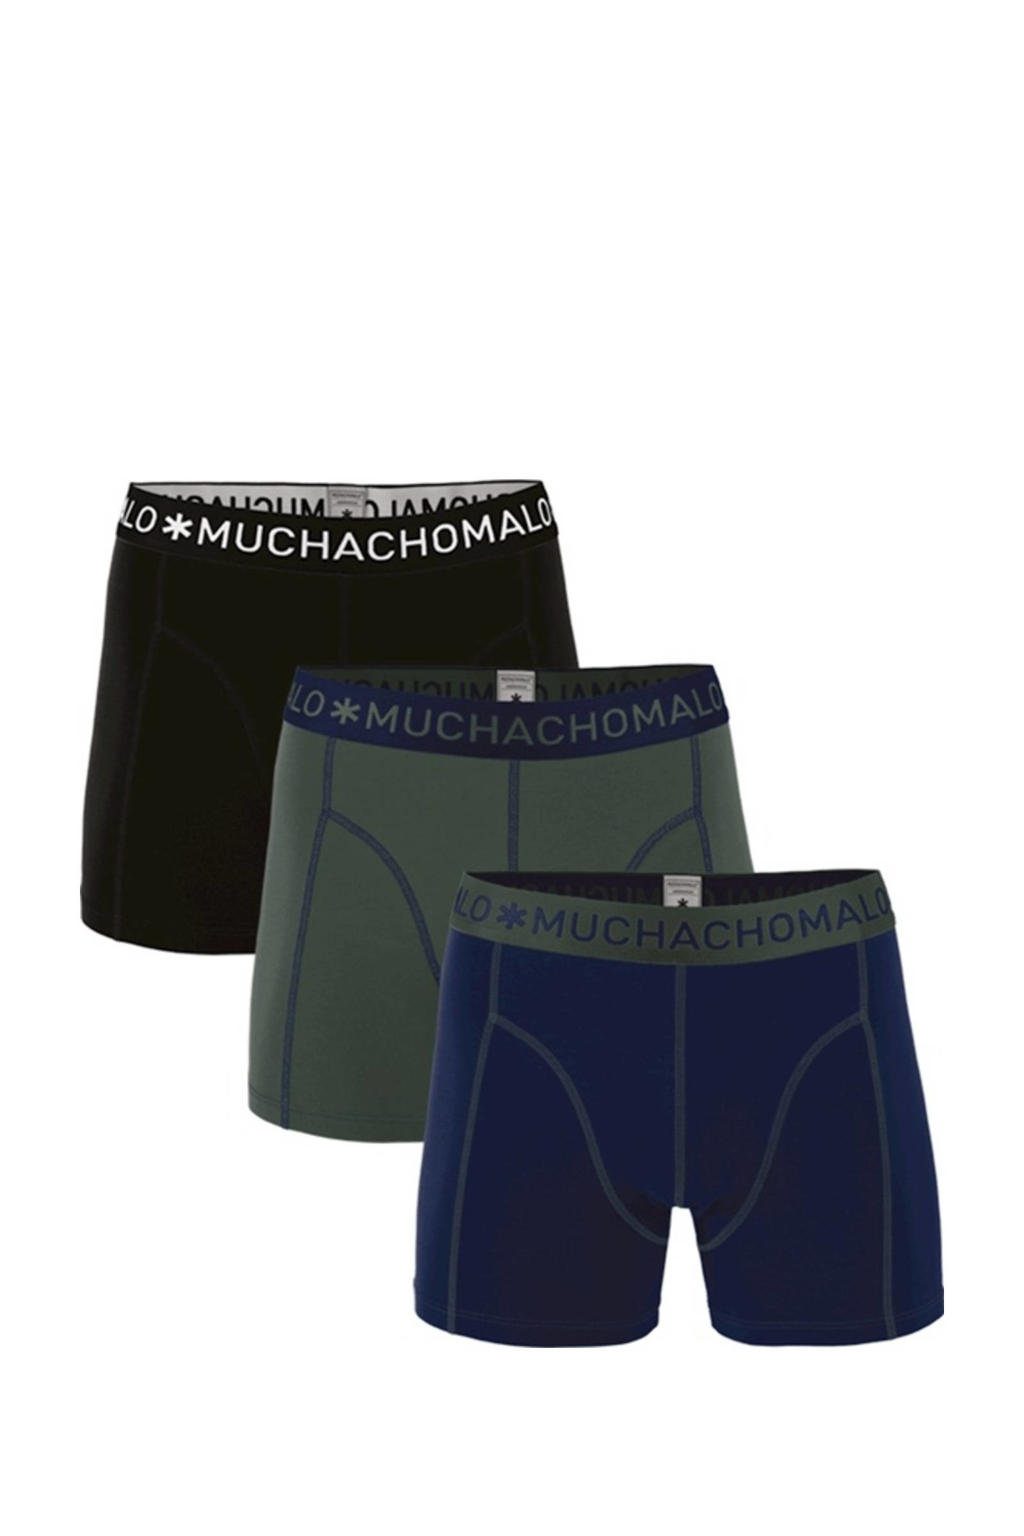 Muchachomalo   boxershort -set van 3 donkerblauw/army/zwart